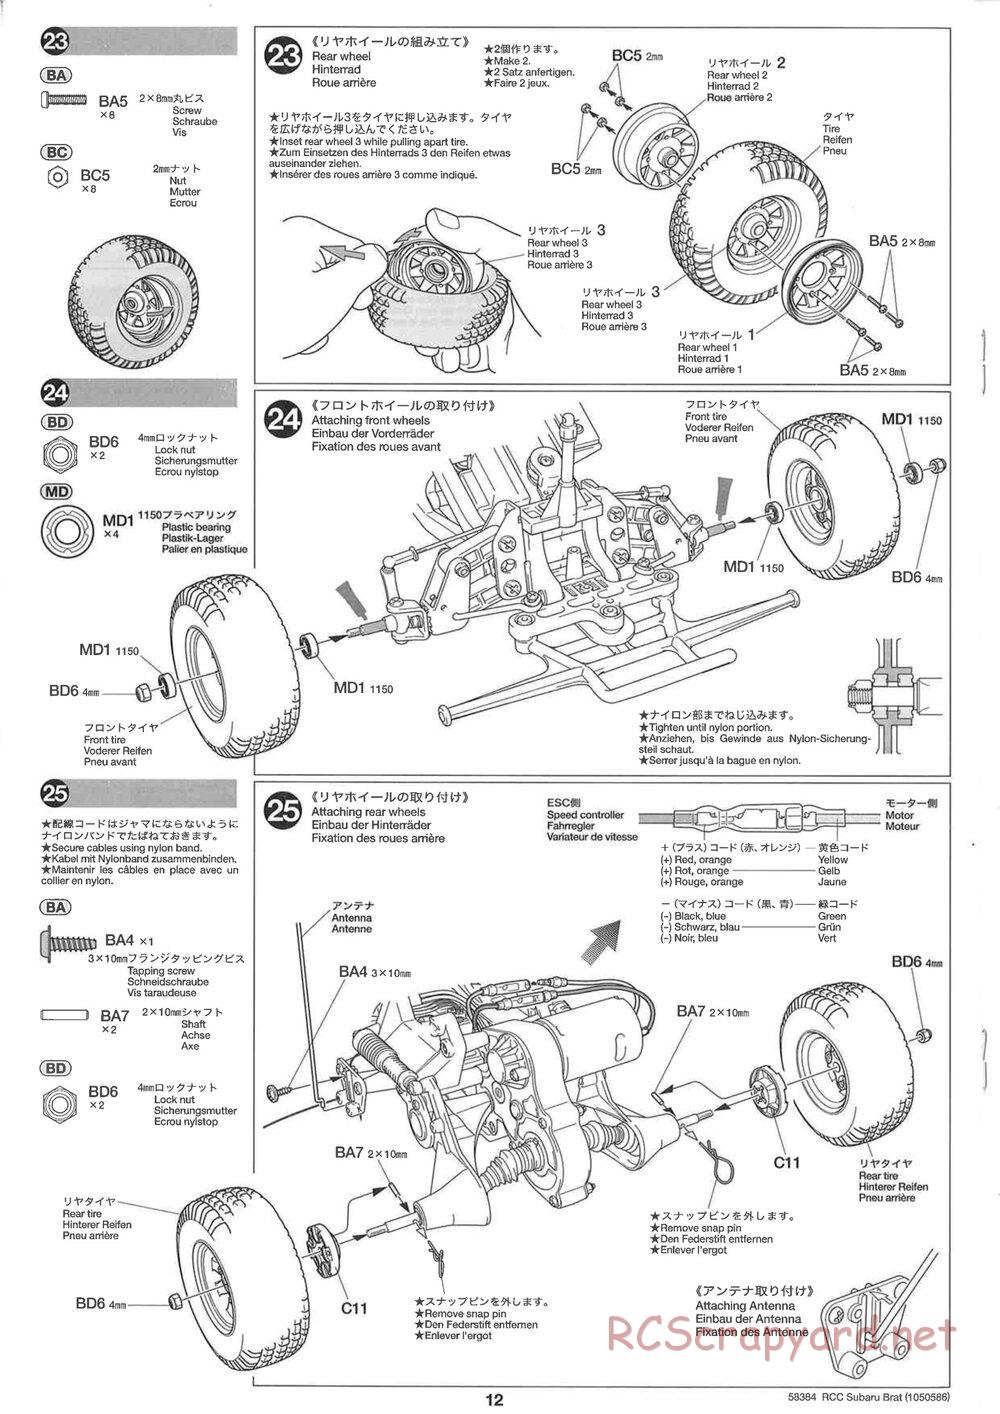 Tamiya - Subaru Brat 2007 - ORV Chassis - Manual - Page 12